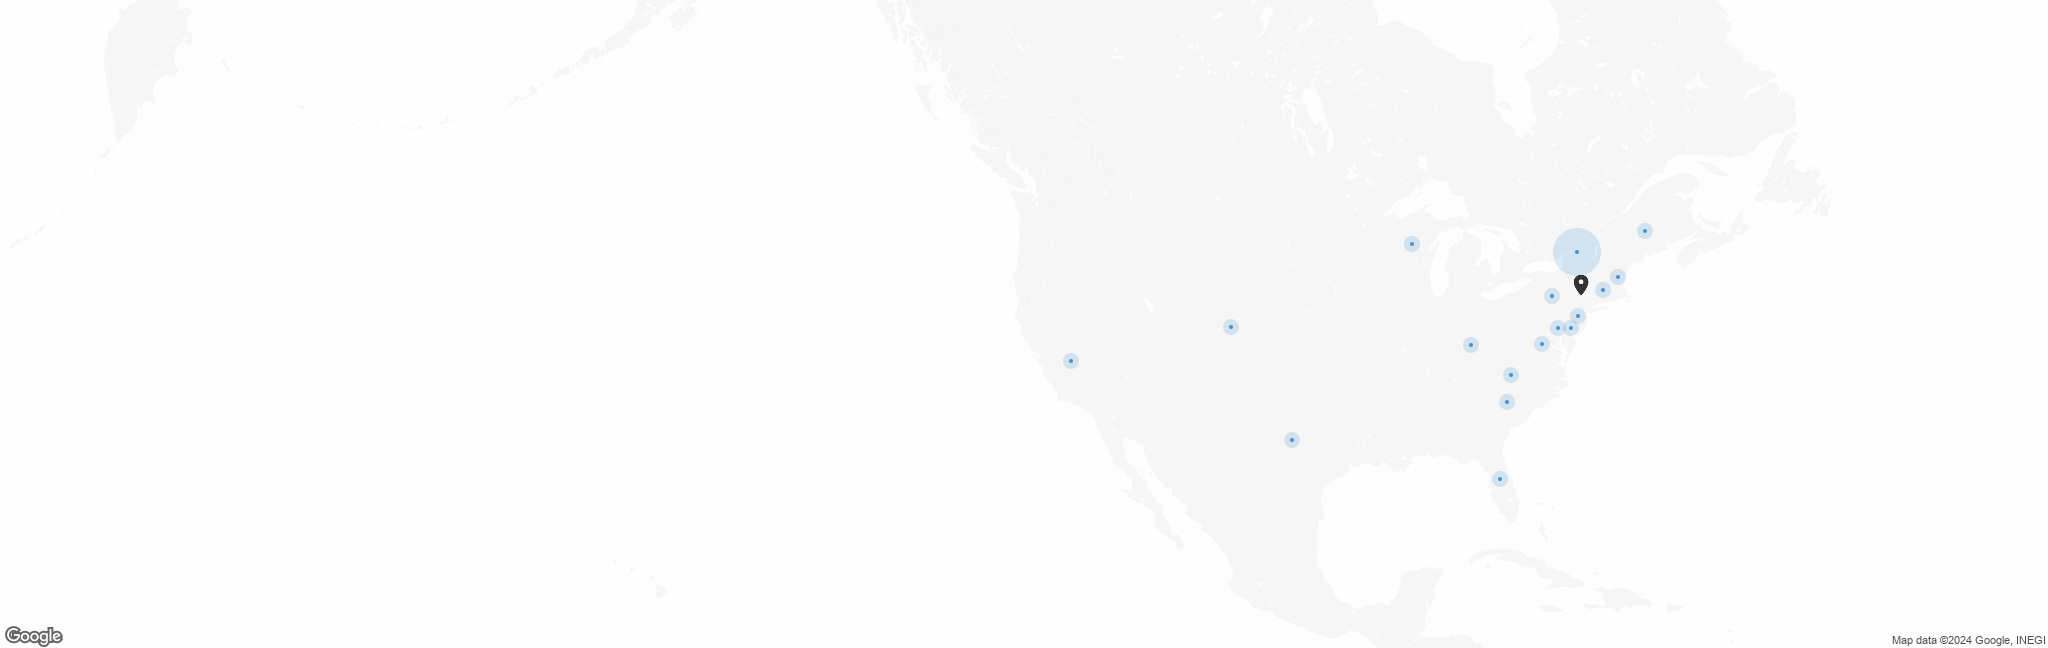 Map of US with pin of Celebrate Life Half Marathon location